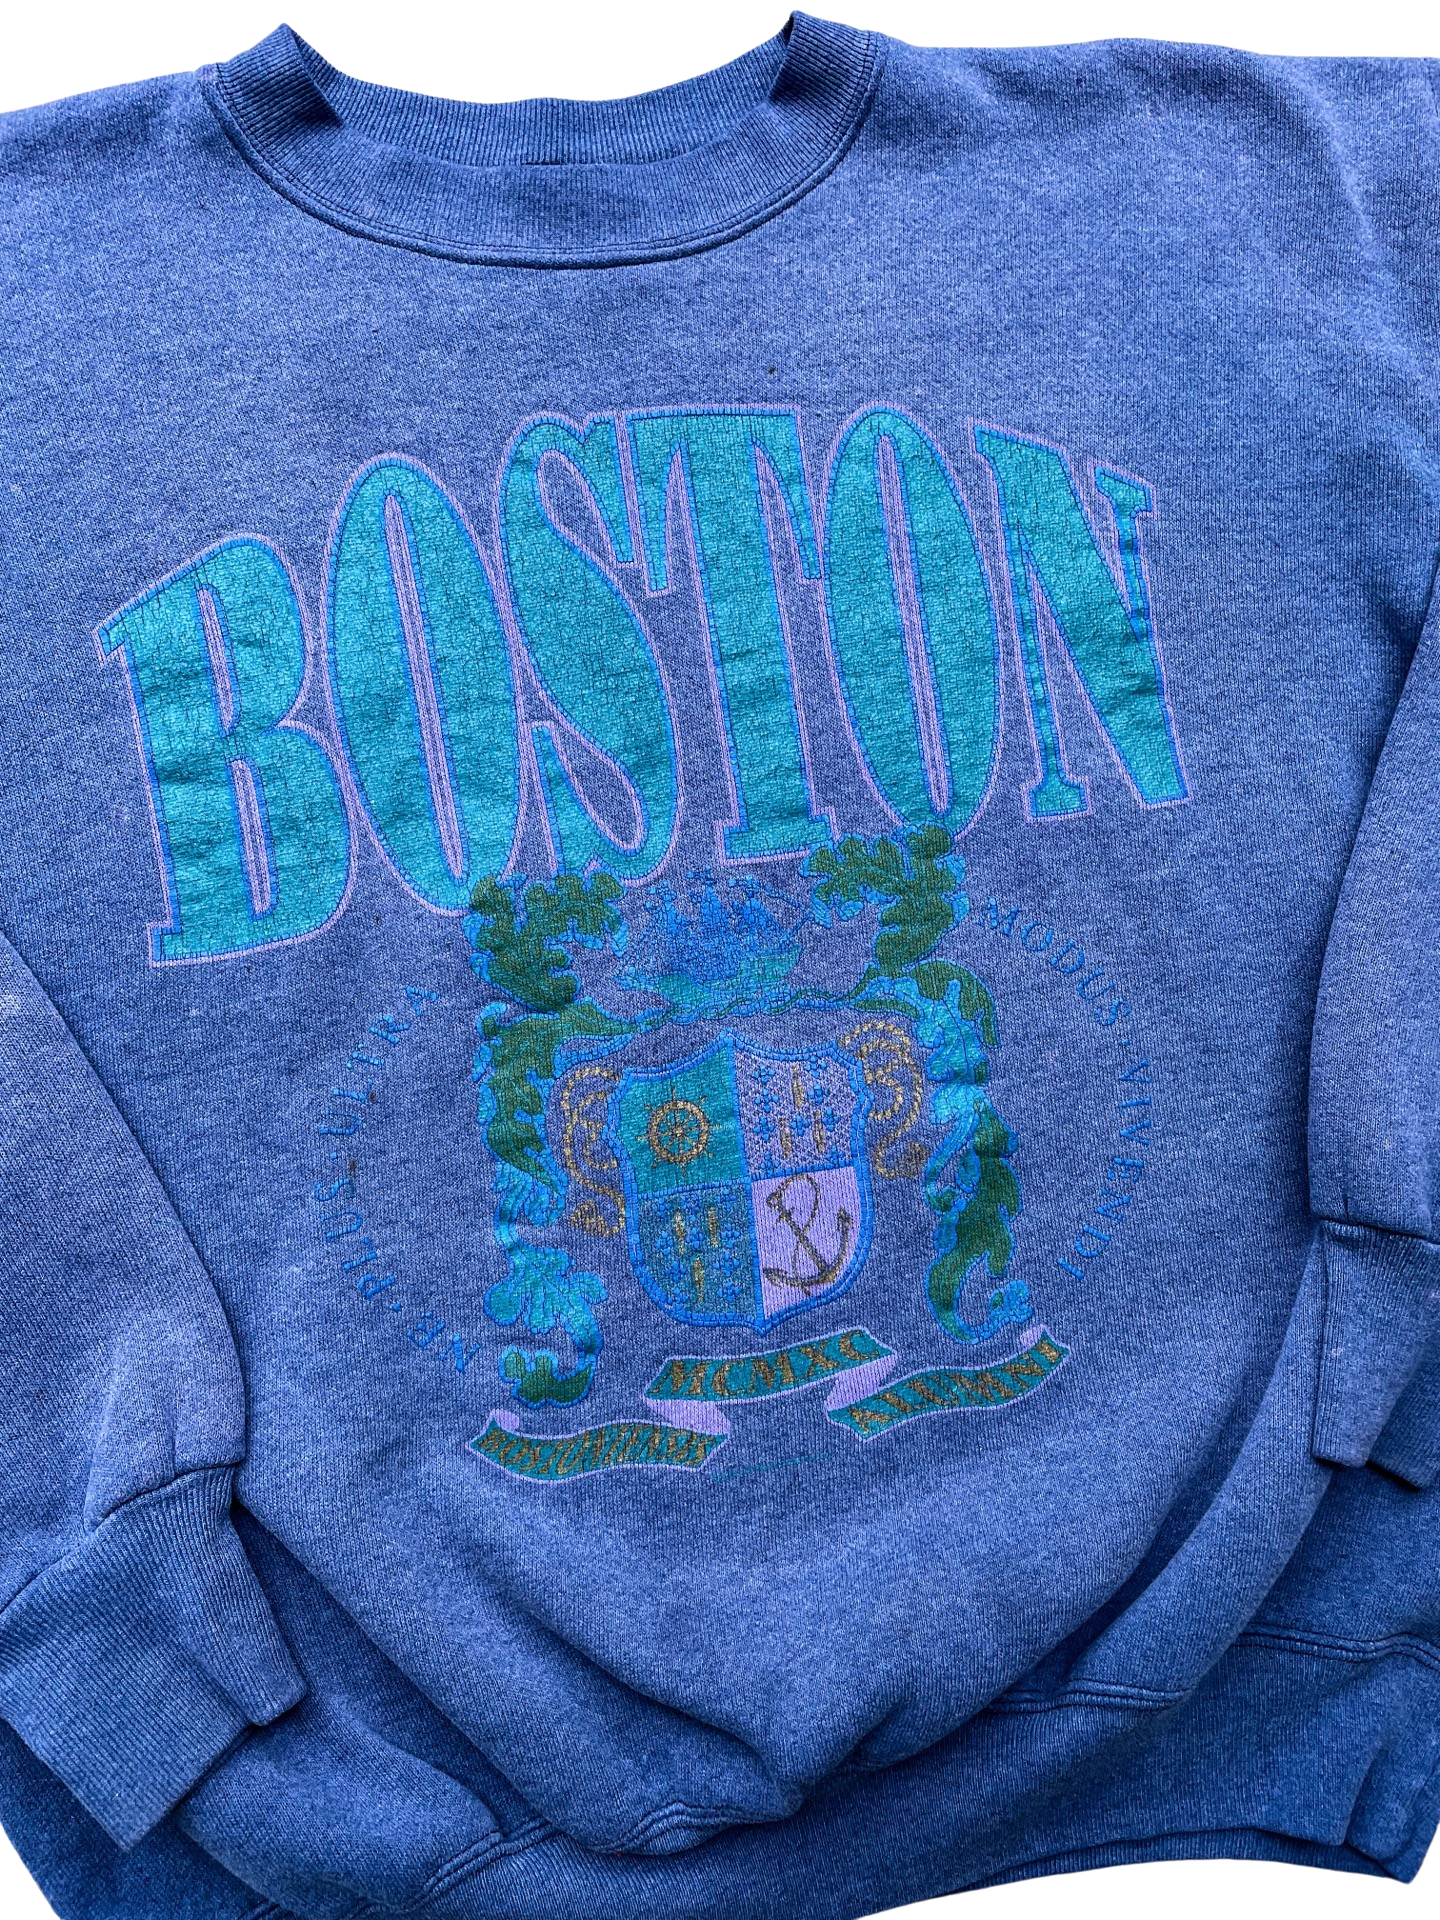 Vintage Boston Sweatshirt